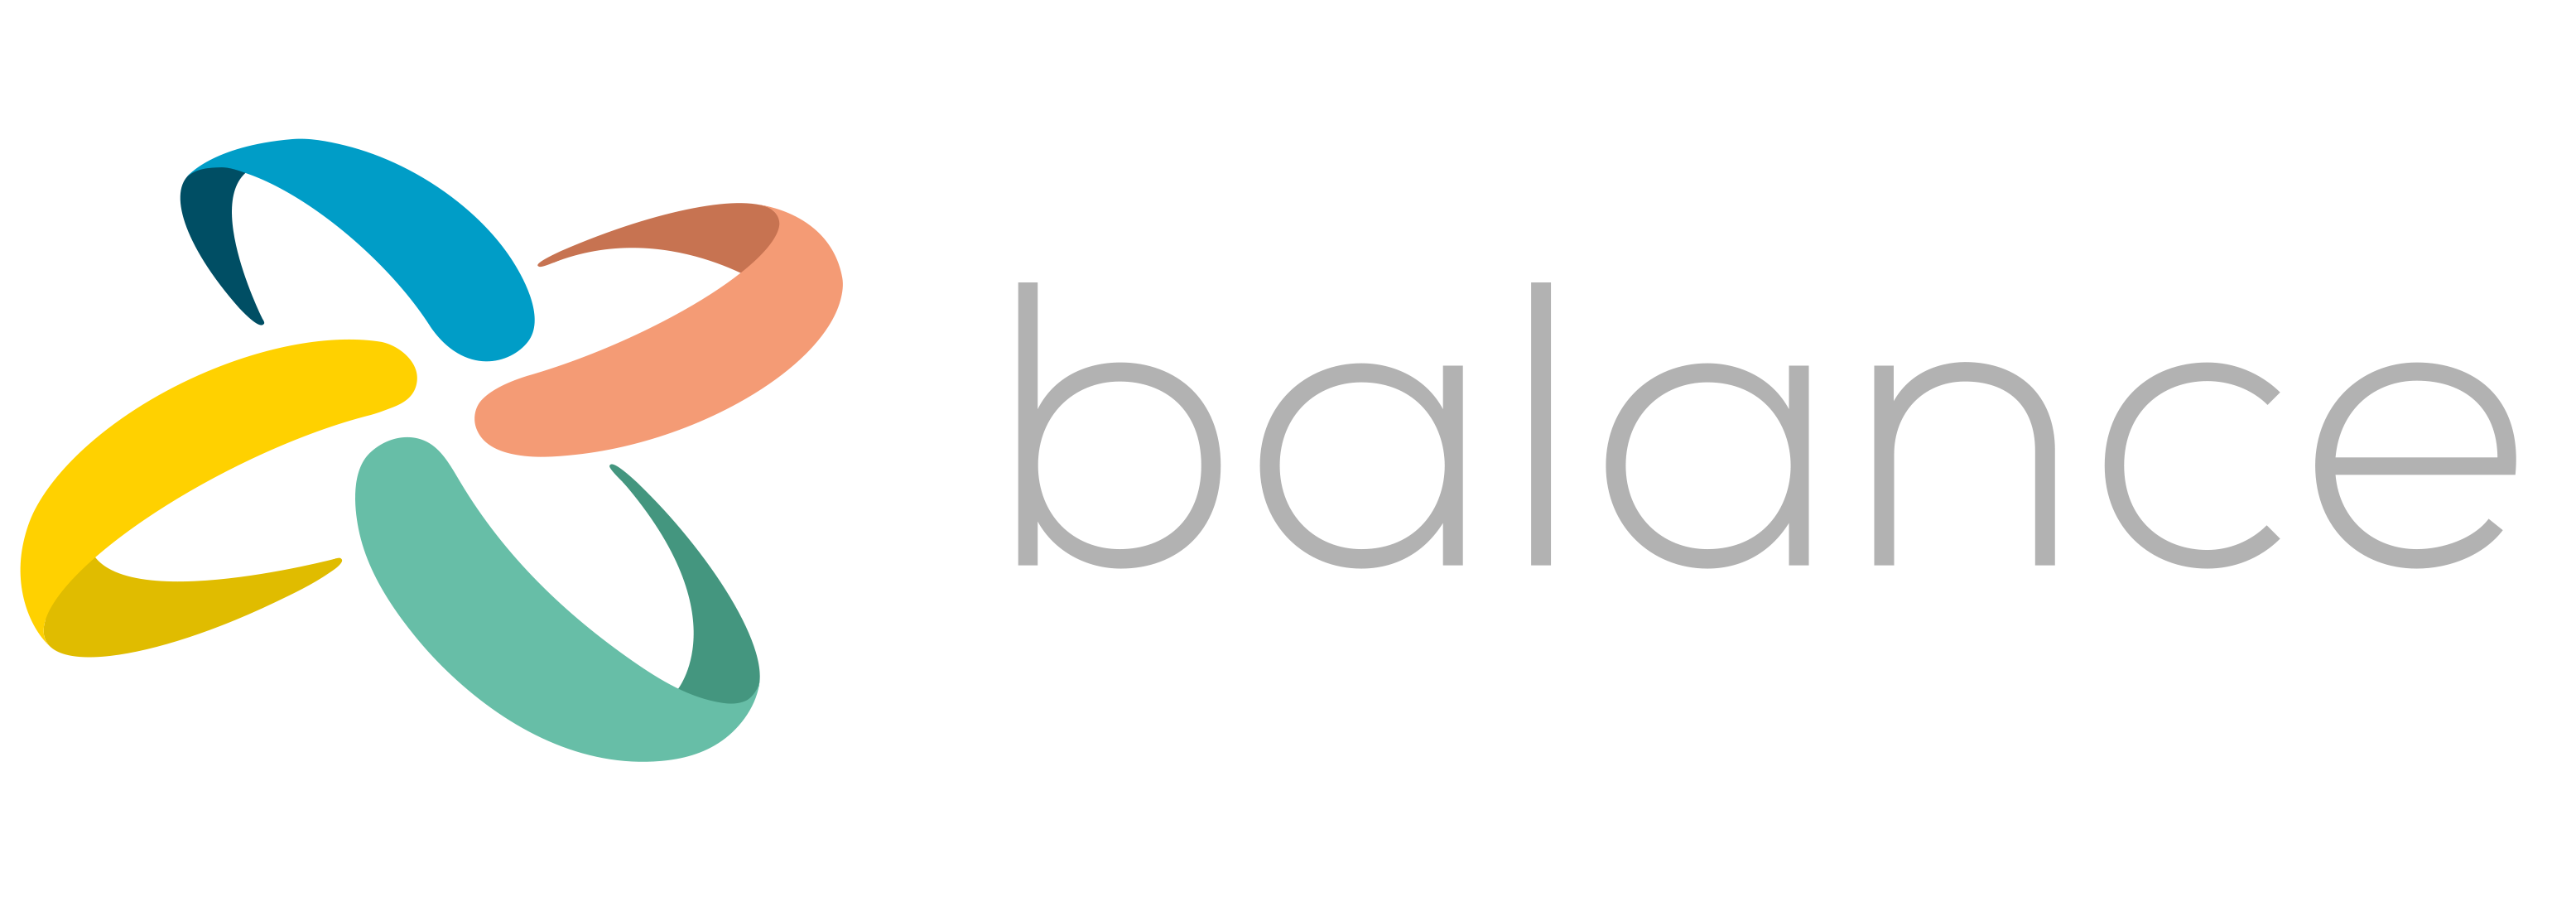 Euronics Balance Logo